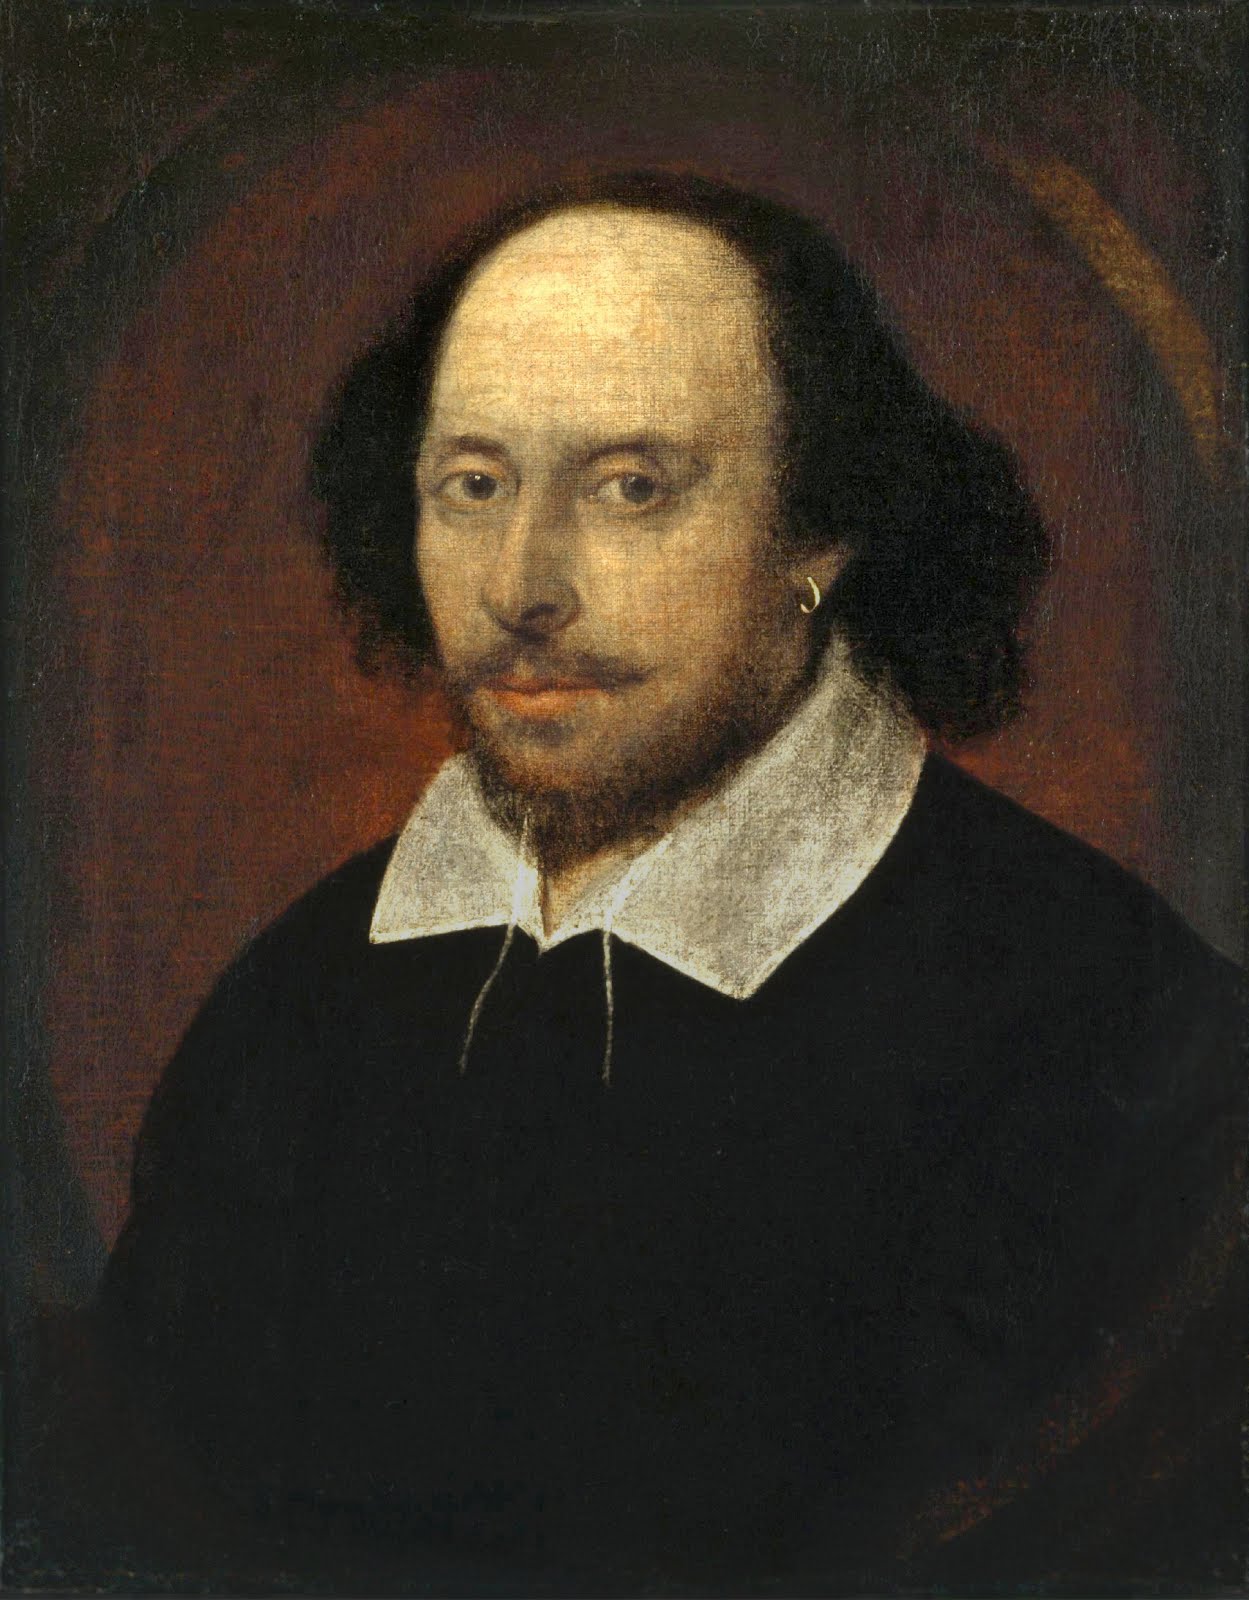 WILLIAM SHAKESPEARE (1564-1616)  PLAYWRIGHT-POET